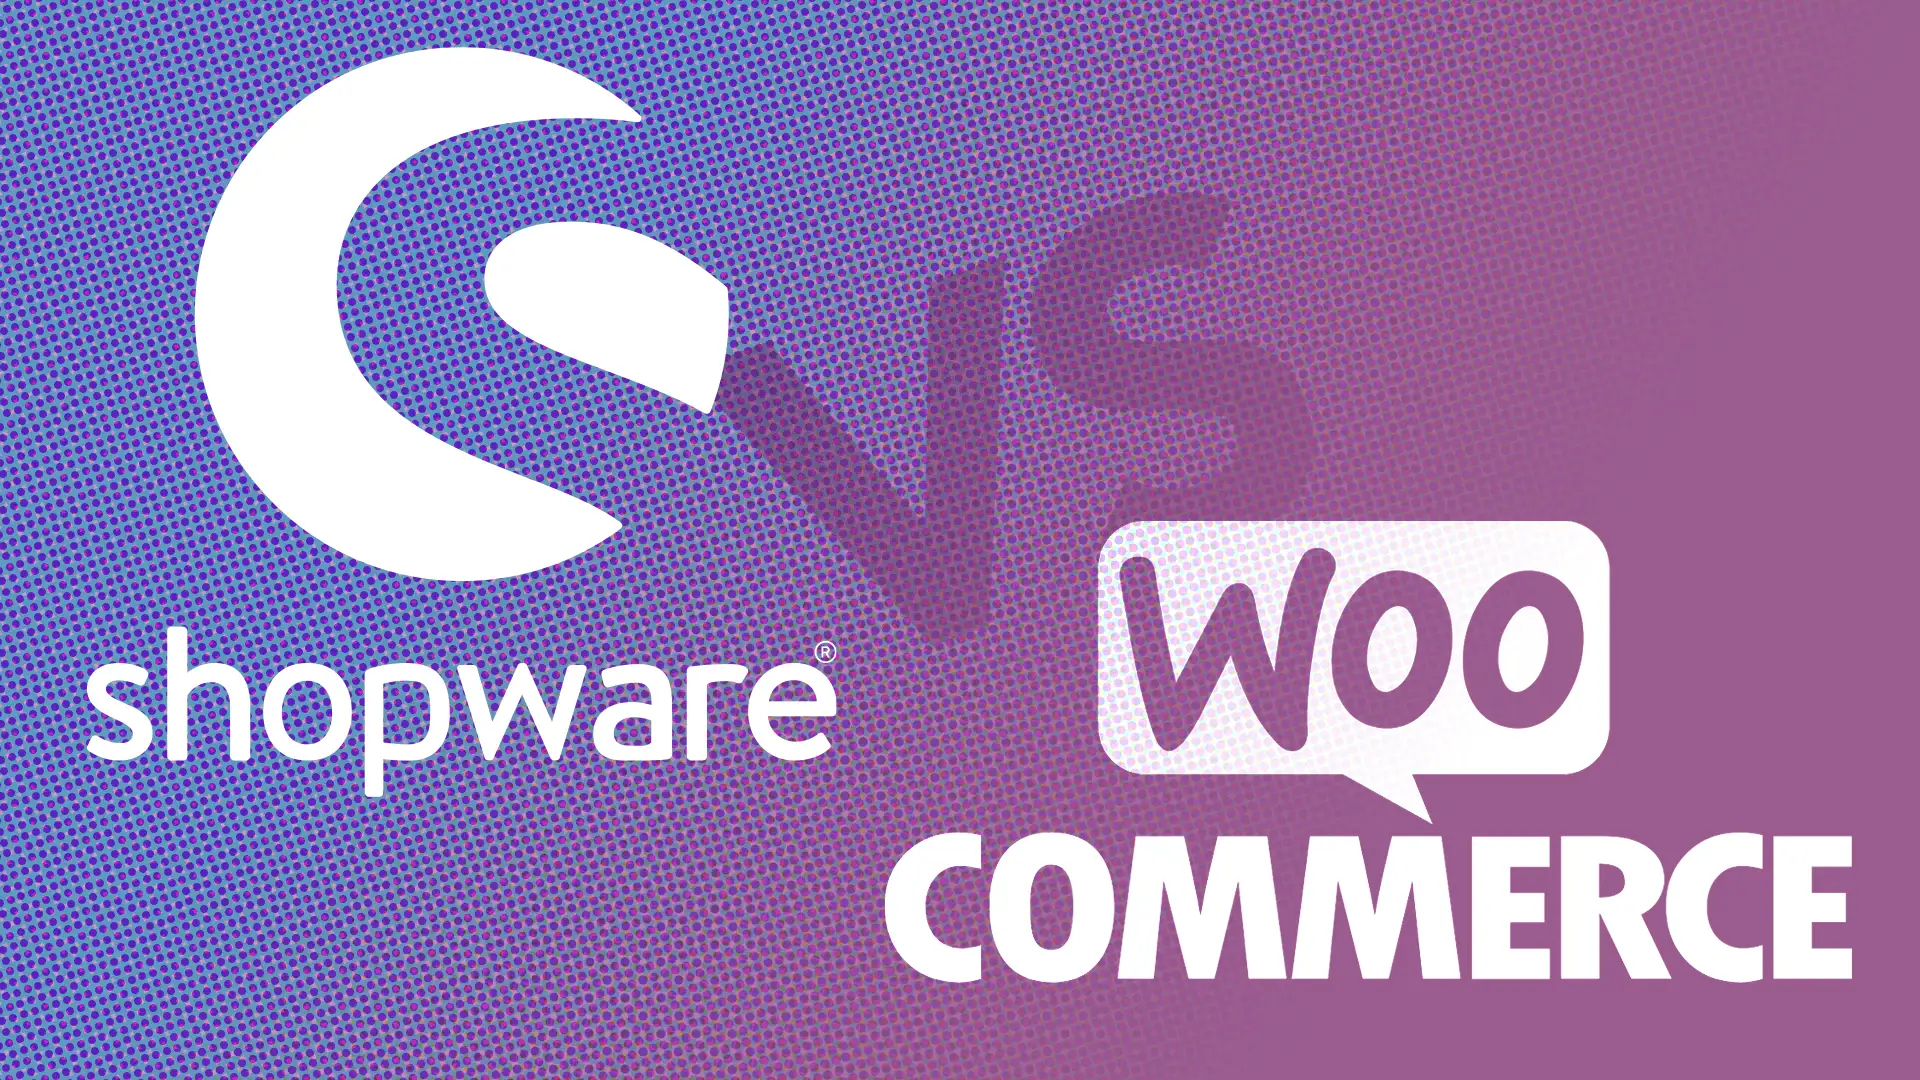 Shopware vs. WooCommerce